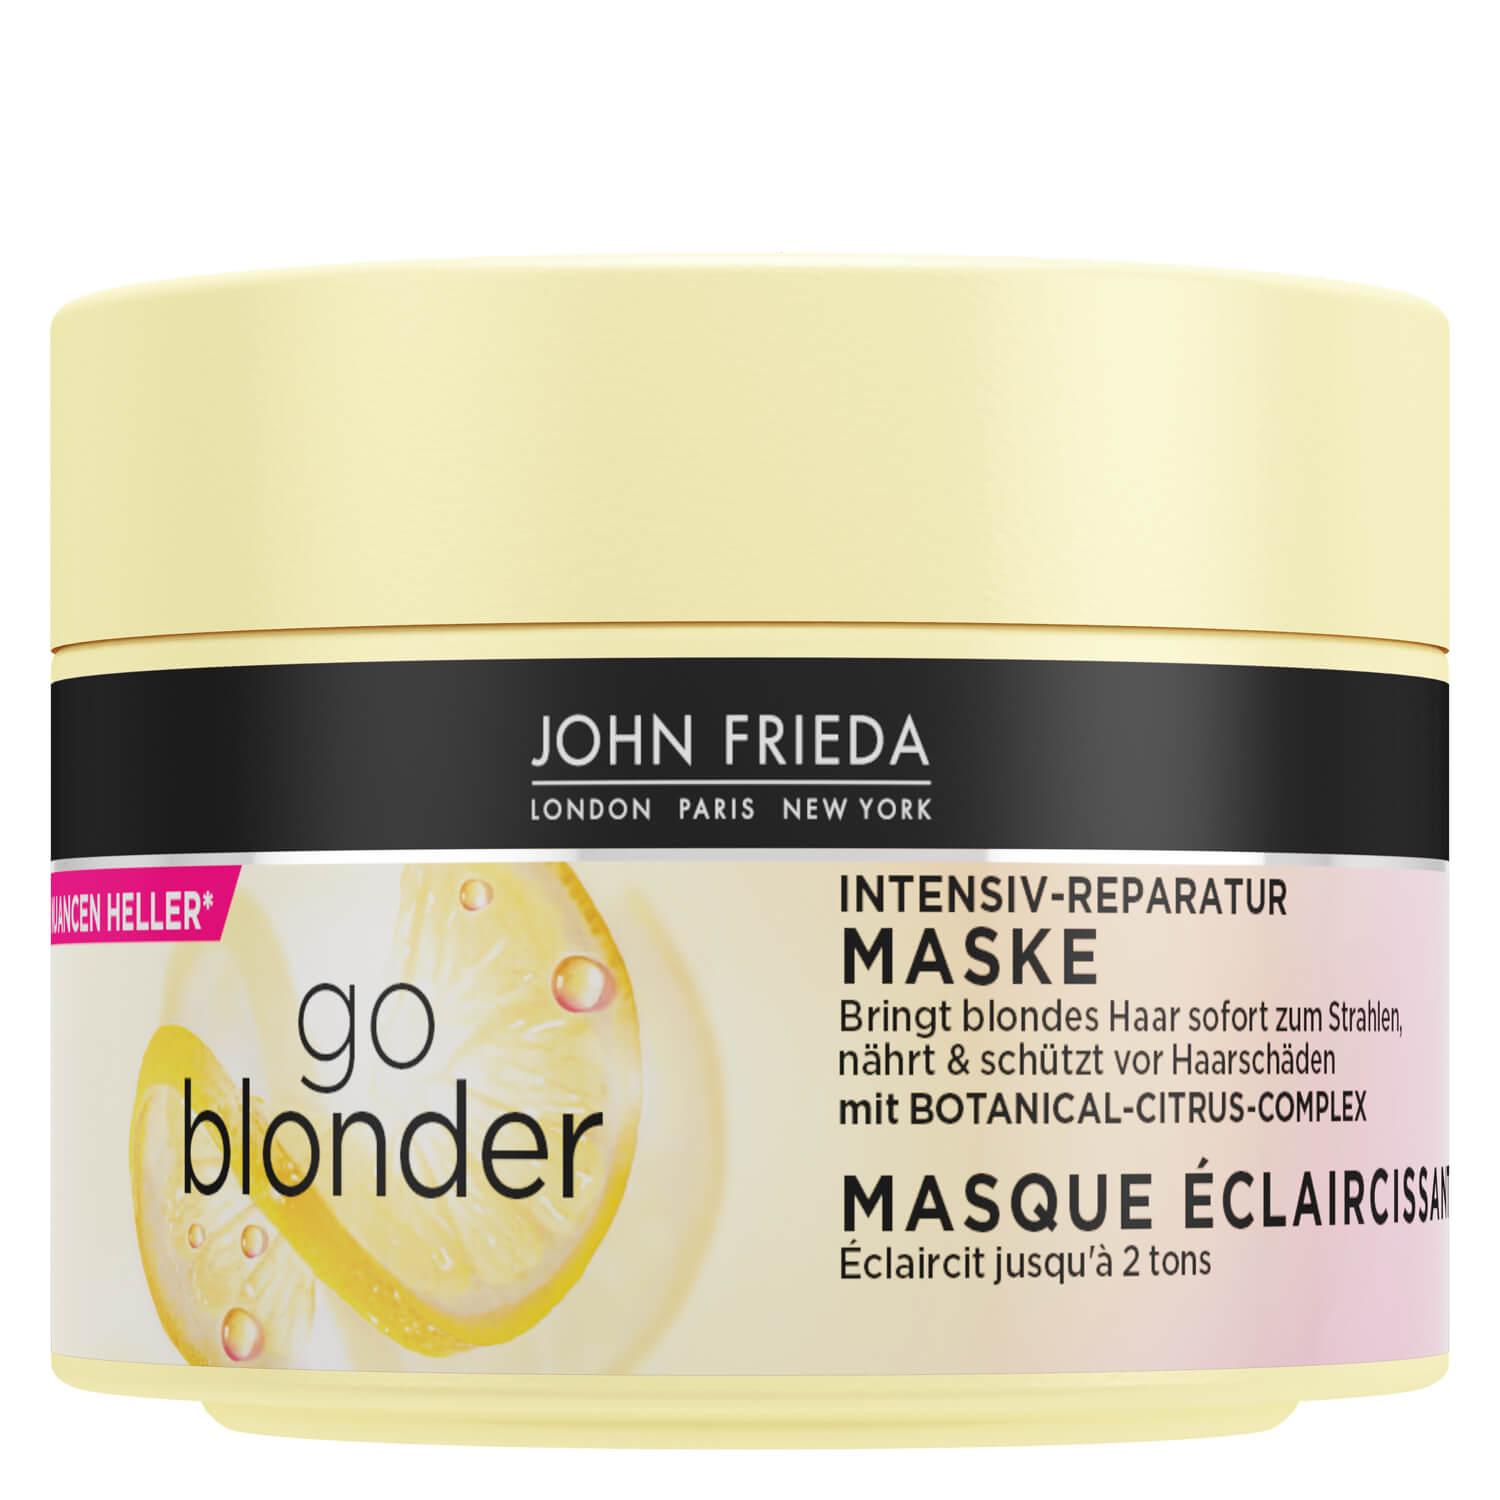 Sheer Blonde - Go Blonder Intensiv Reparatur-Maske